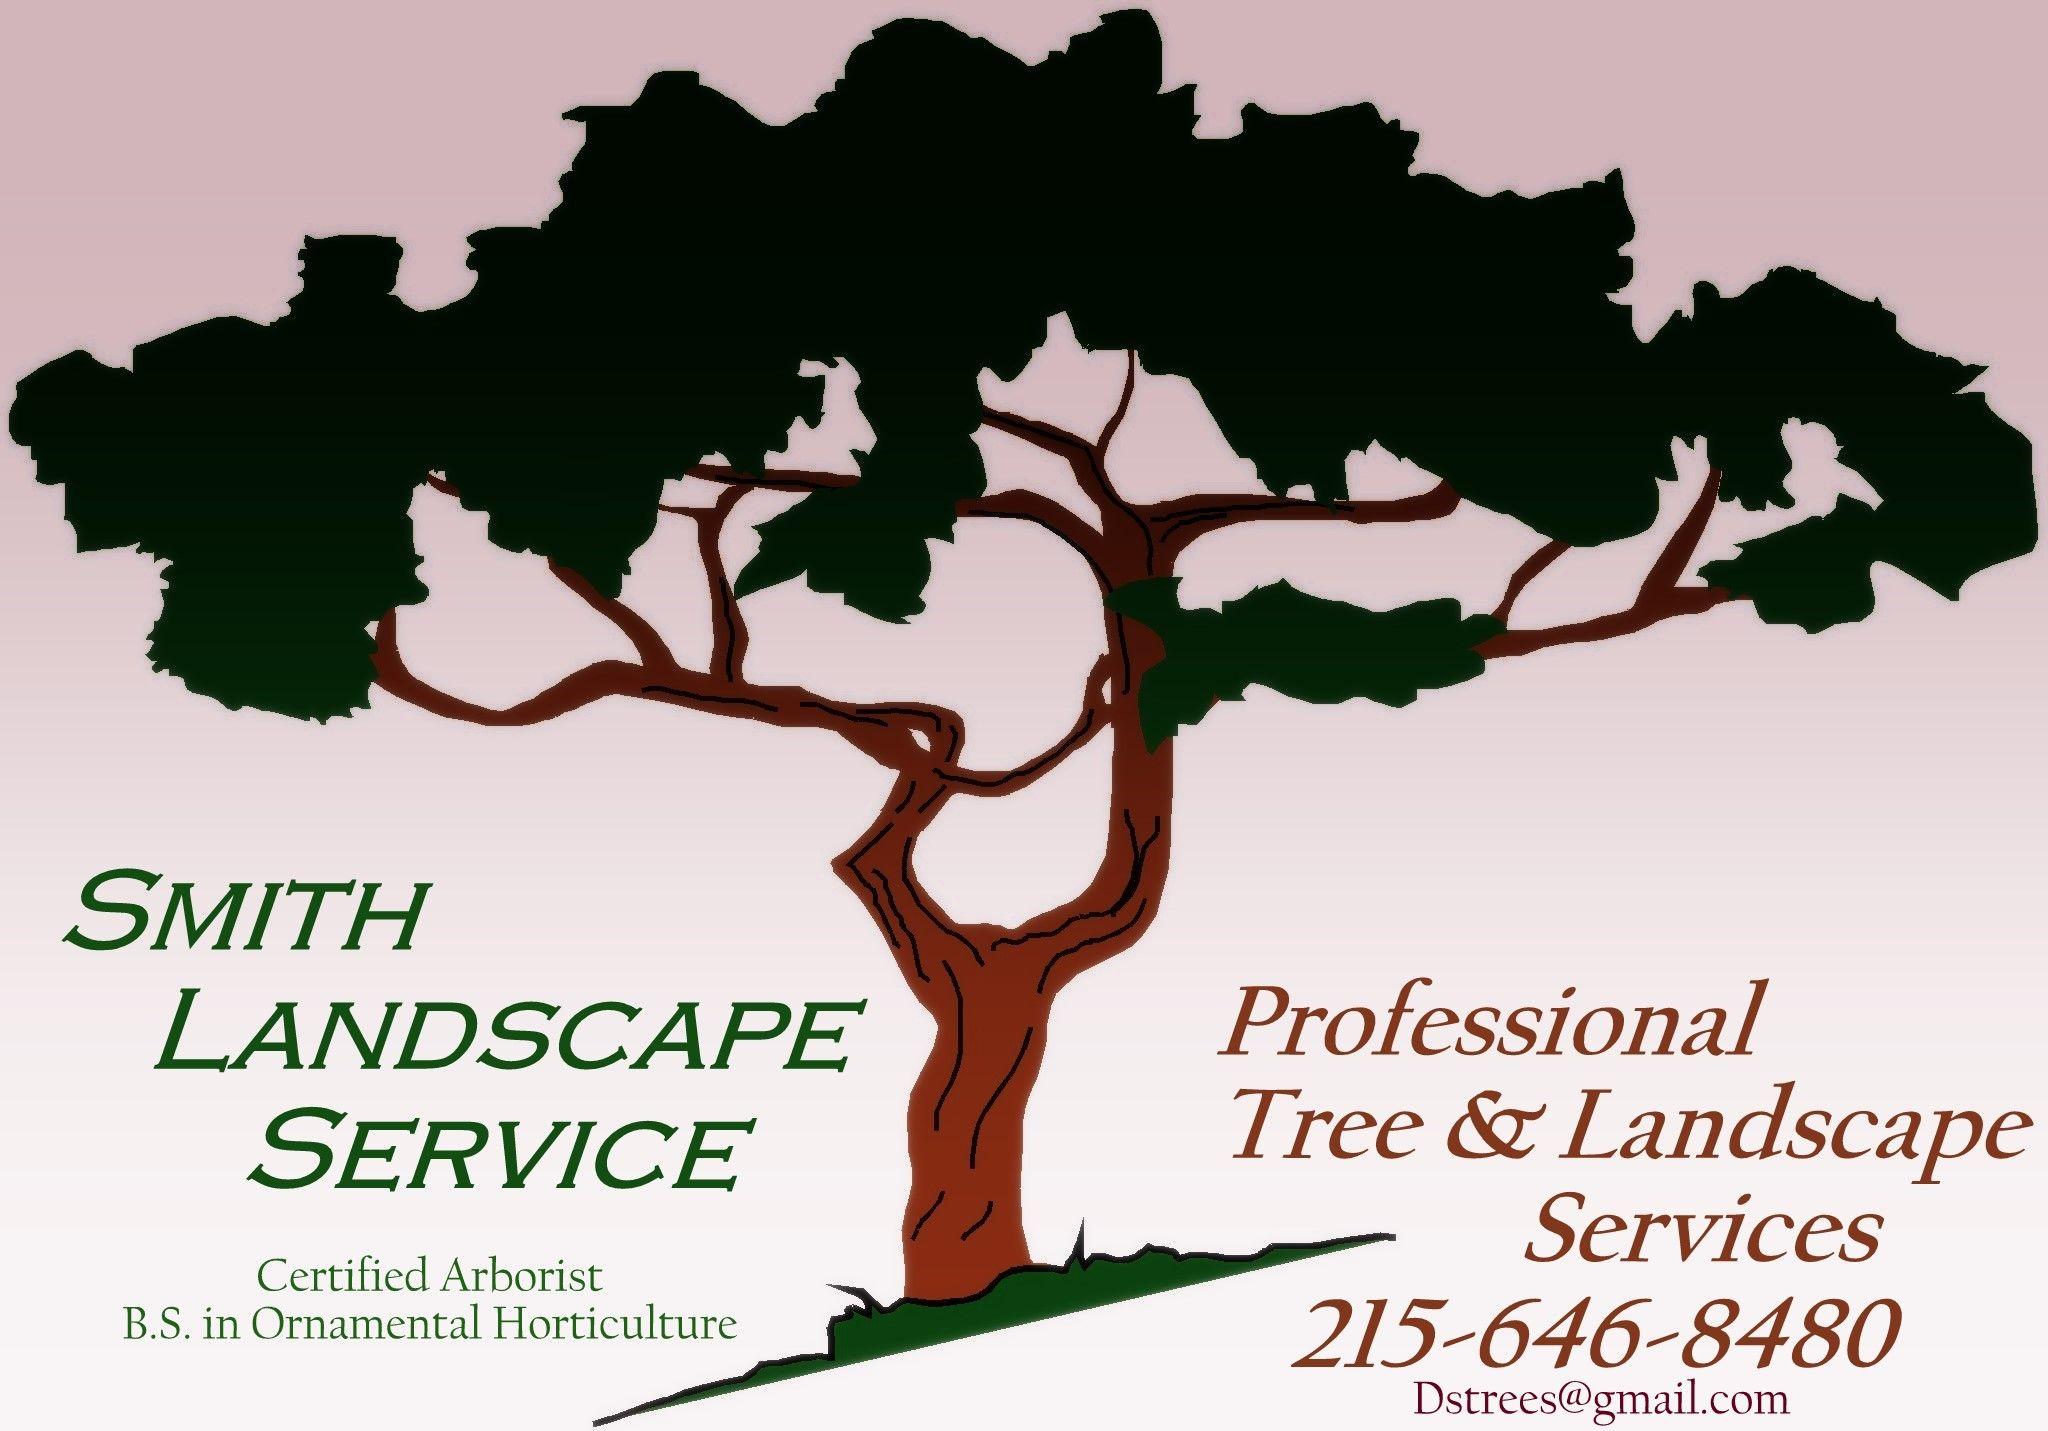 Landscape Services B Logo - Smith Landscape Service